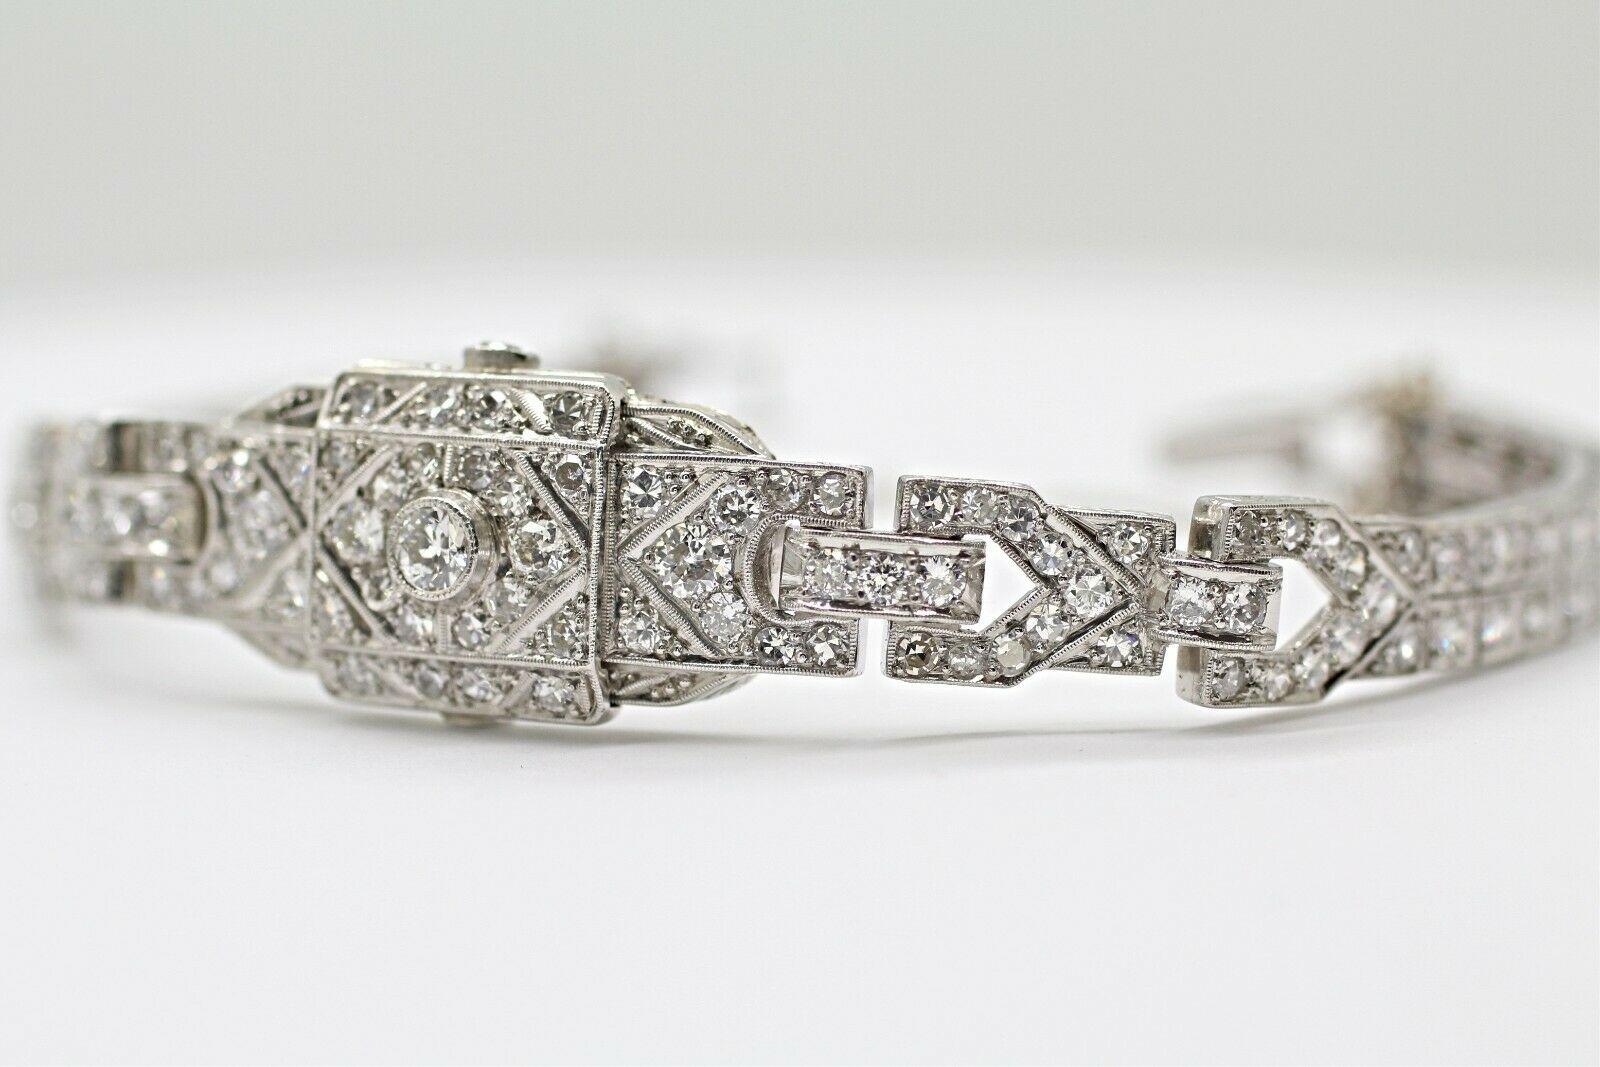 Round Cut Art Deco Diamond Bracelet Was a Watch Converted to a Bracelet